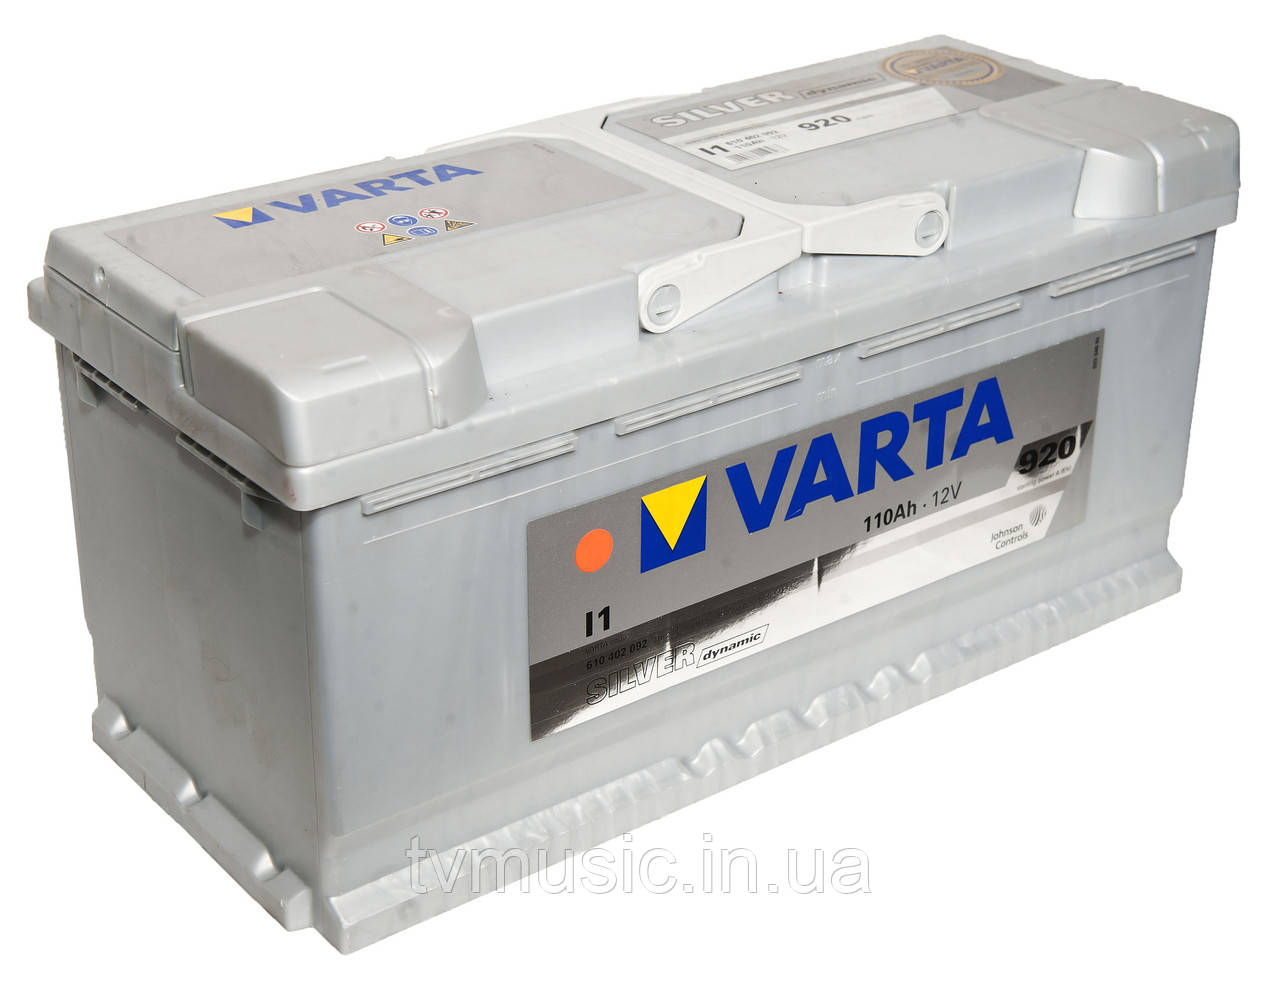 Аккумулятор Varta Silver Dynamic I1 110Ah 12V (610 402 092), цена 6285 грн  - Prom.ua (ID#427941323)